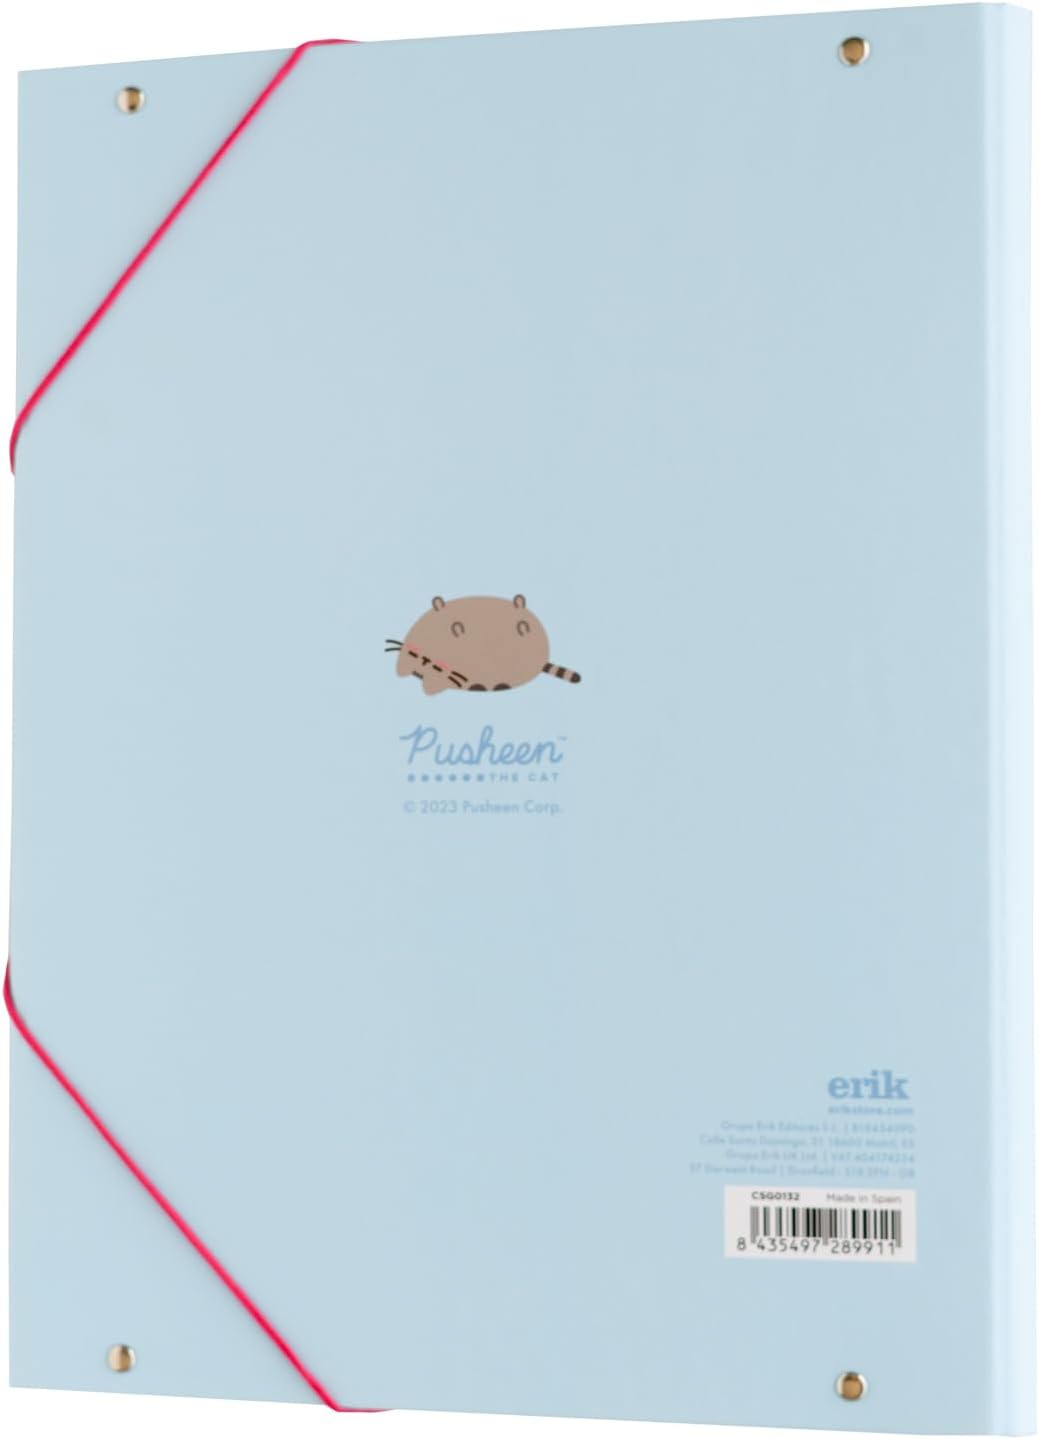 Grupo Erik Pusheen A4 File Folder | 13.4 x 10 inches - 34 x 25.5 cm | 3 Flap Folder